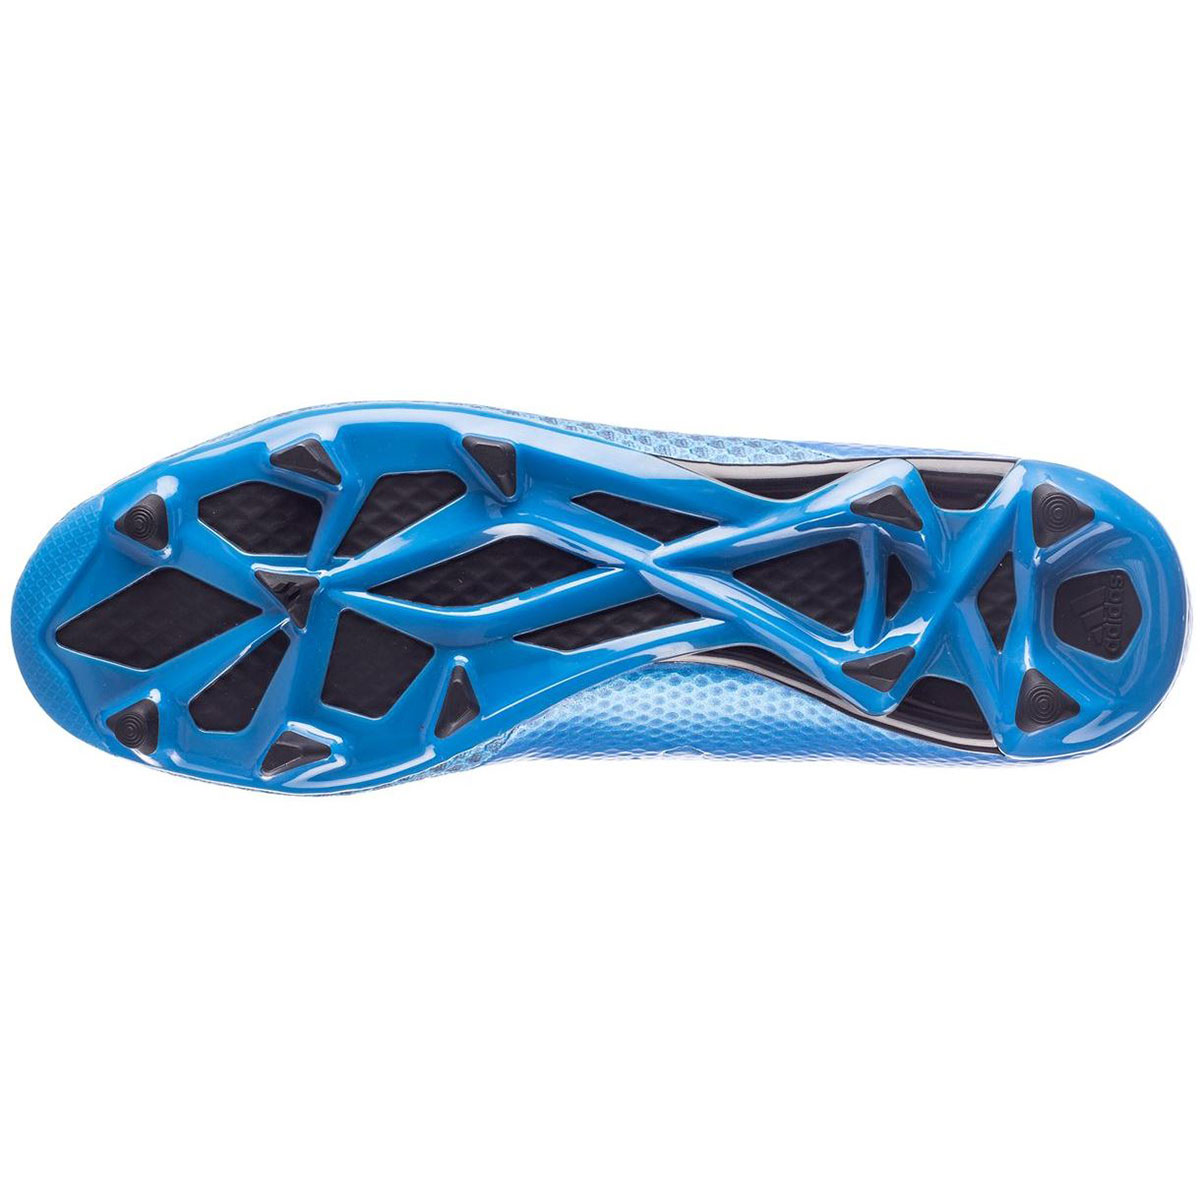 adidas Messi 16.2 FG blue Мъжки футболни обувки AQ3111